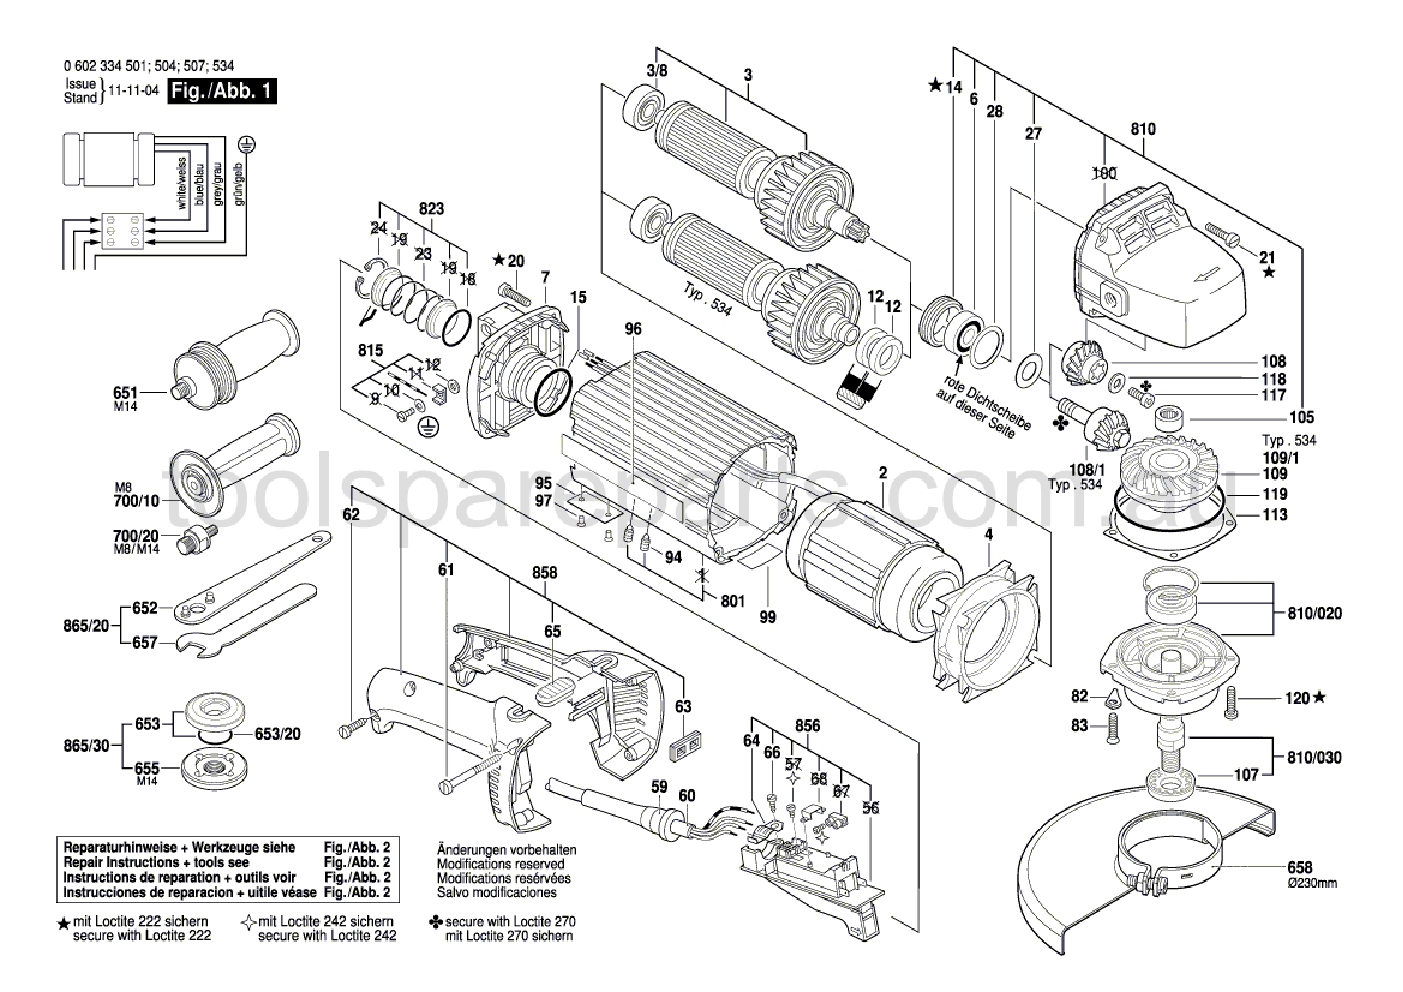 Bosch HWS 810/230 0602334507  Diagram 1